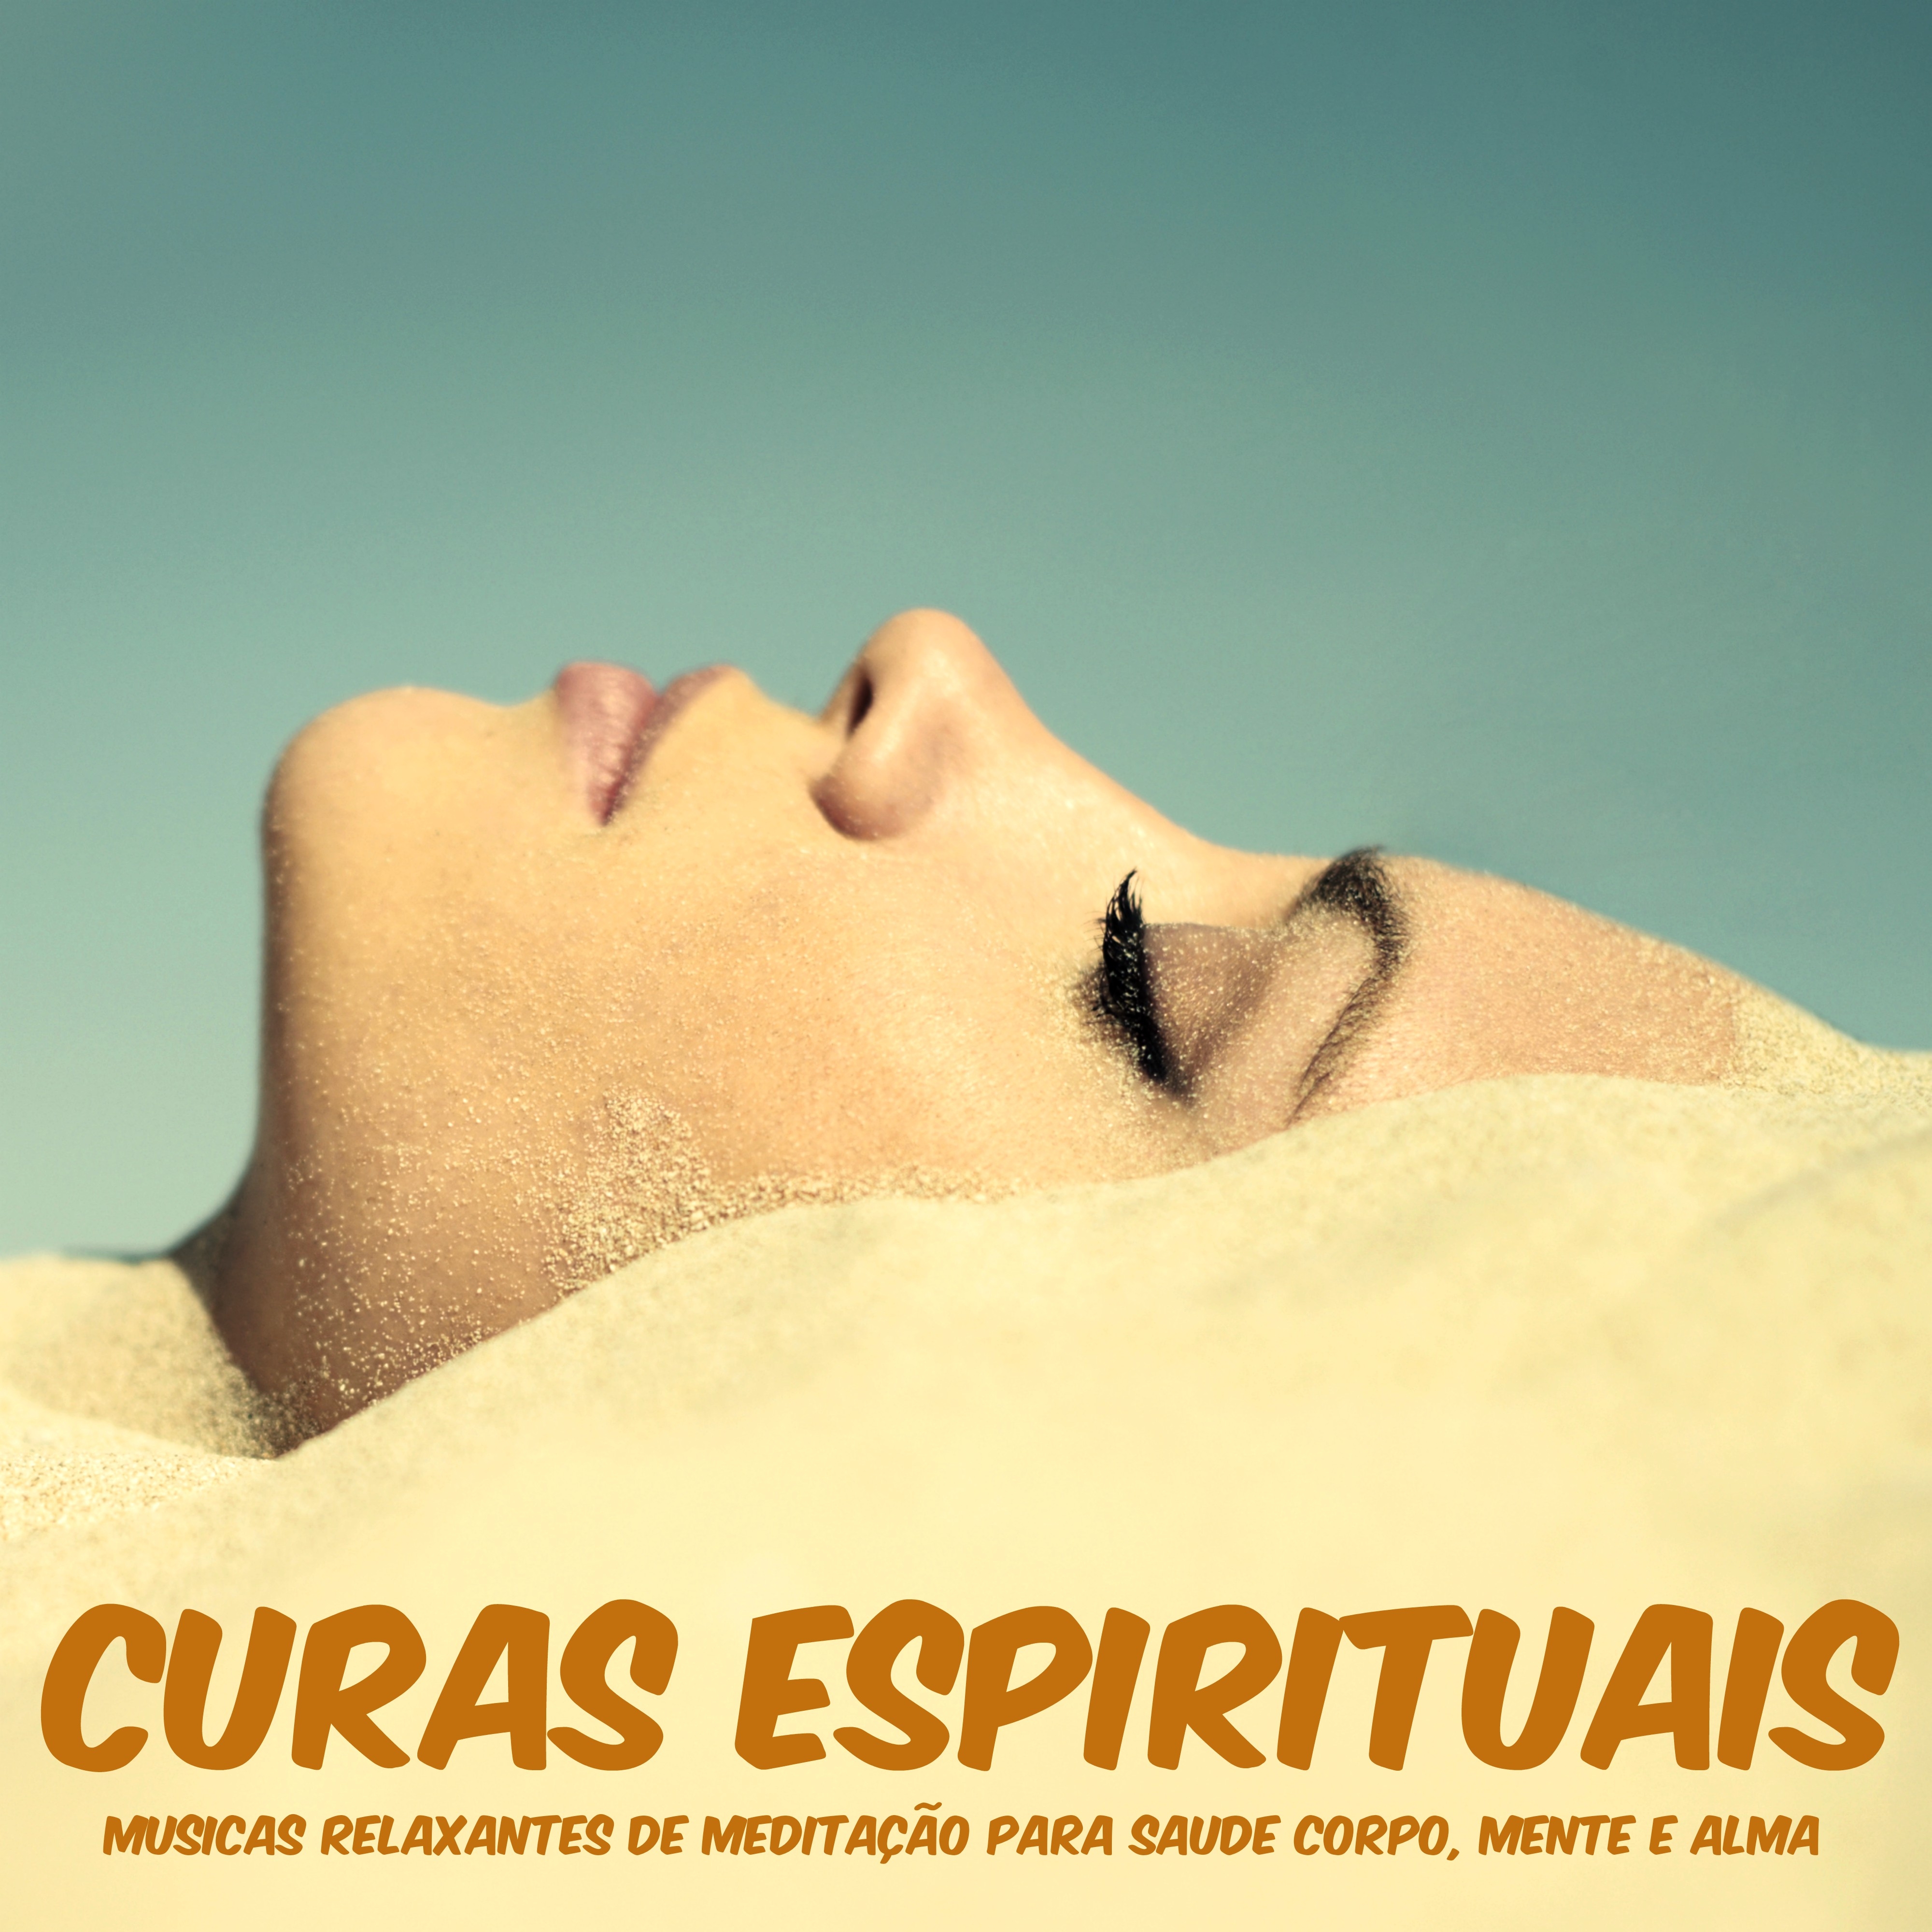 Curas Espirituais – Musicas Relaxantes de Meditação para Saude Corpo, Mente e Alma